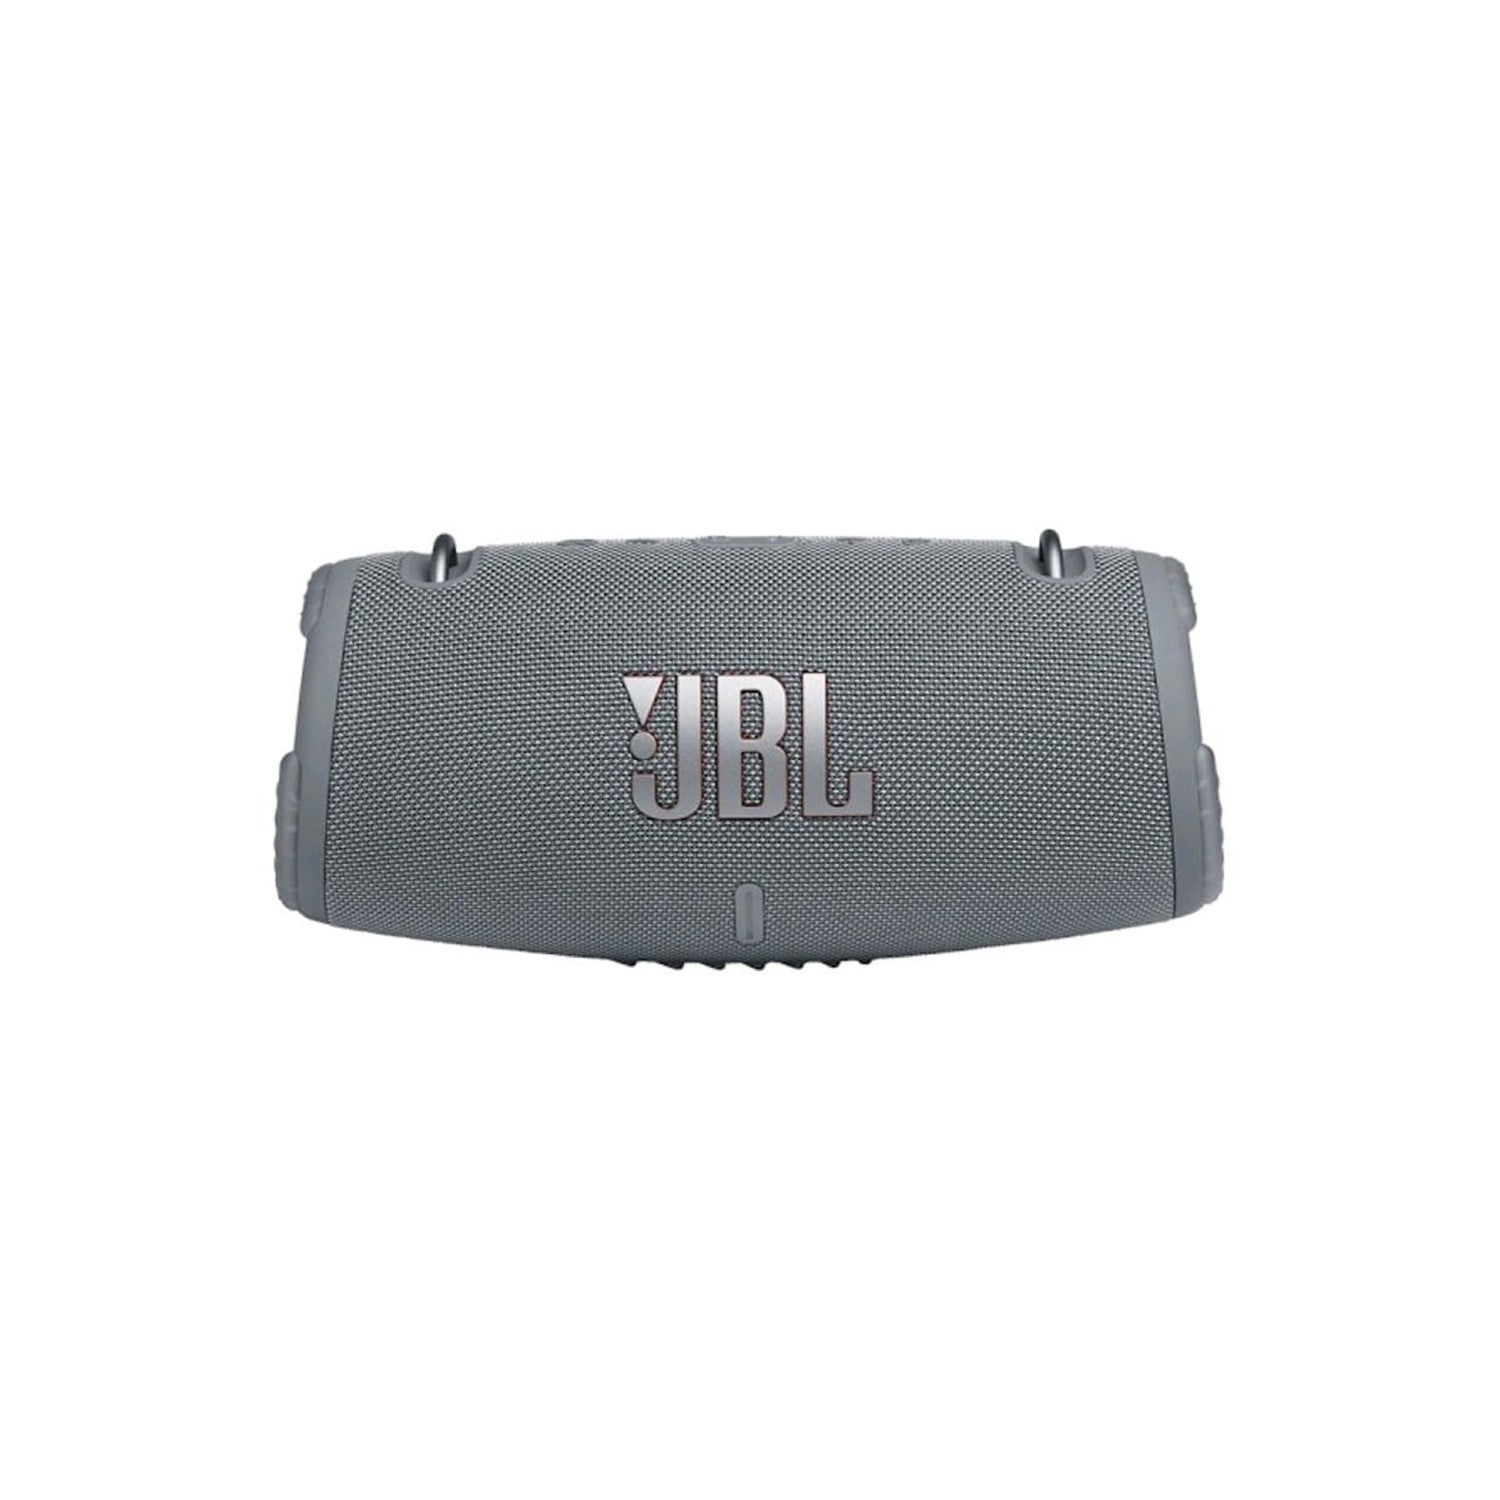 JBL Xtreme 3 portable Bluetooth speaker